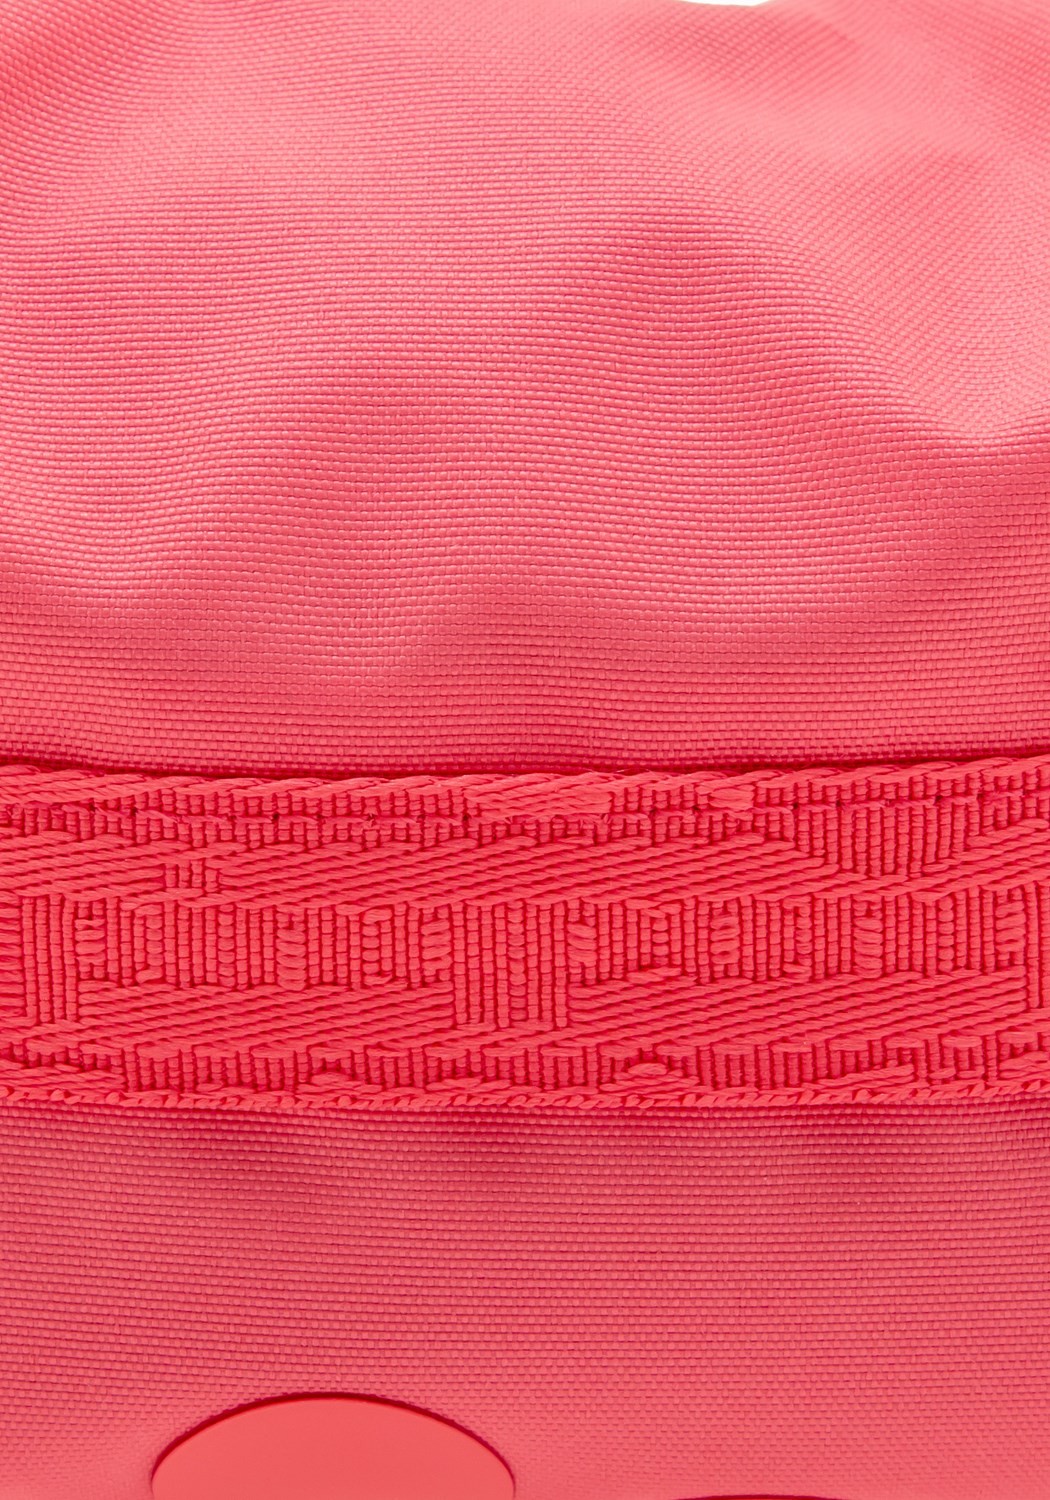 PPC-HPB-001-40140 Brik watermelon pink | Bildmaterial bereitgestellt von SHOES.PLEASE.